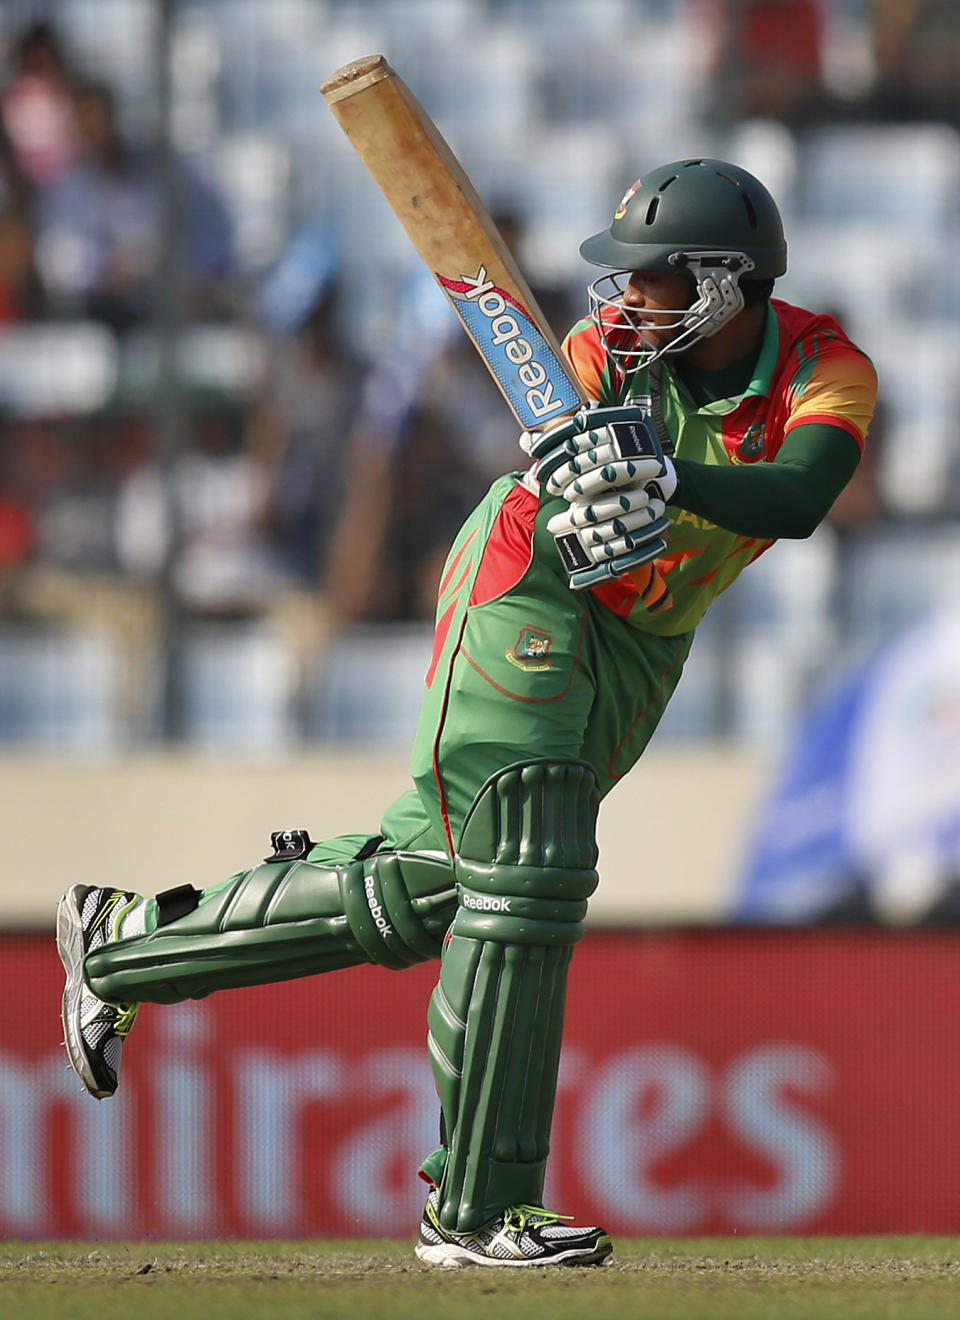 Bangladesh batsman Shakib Al Hasan watches his shot during their ICC Twenty20 Cricket World Cup match against Australia, in Dhaka, Bangladesh, Tuesday, April 1, 2014. (AP Photo/Aijaz Rahi)